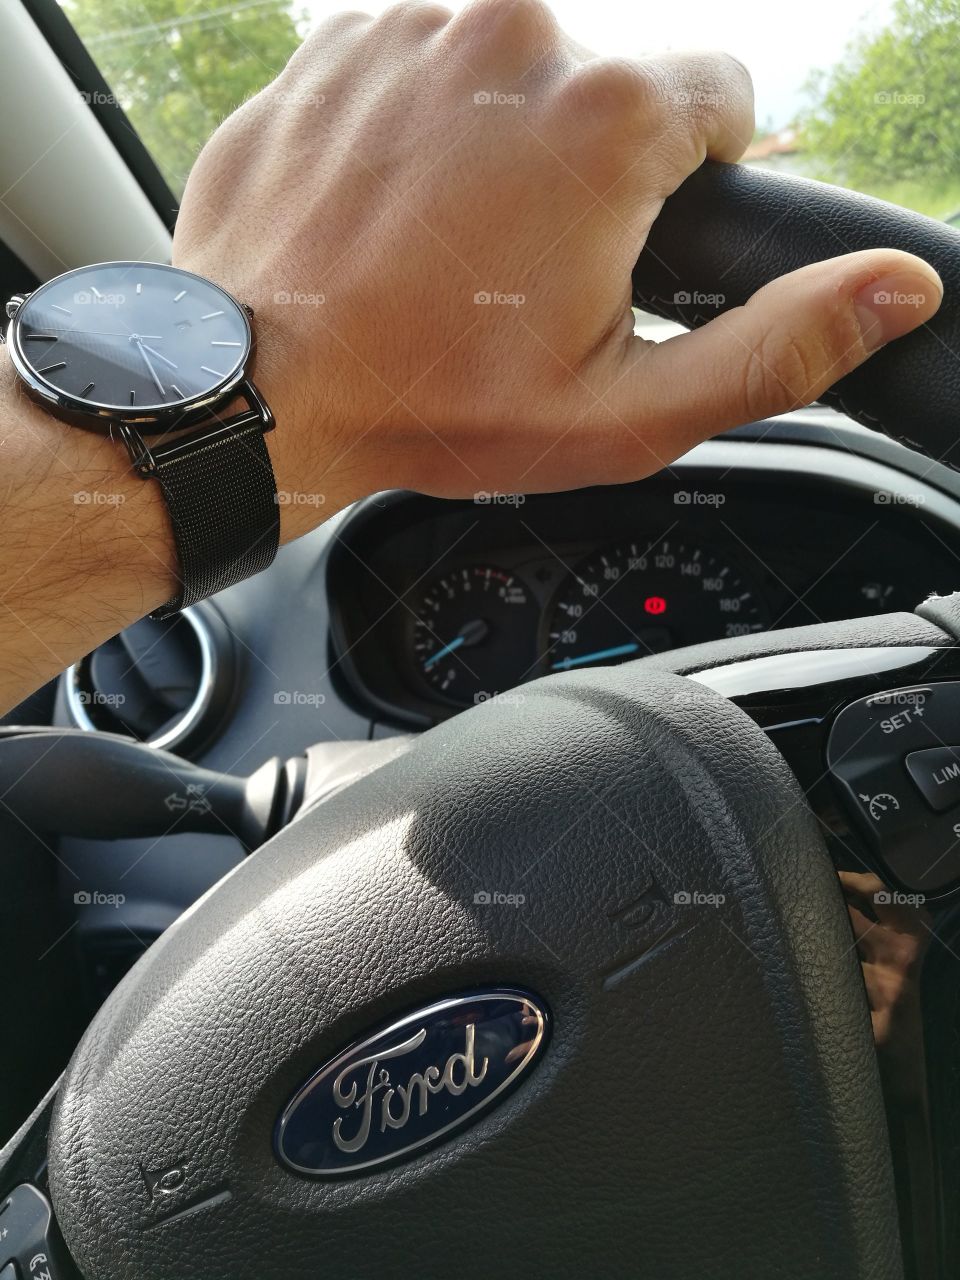 Ford Ka Plus Burei Watch